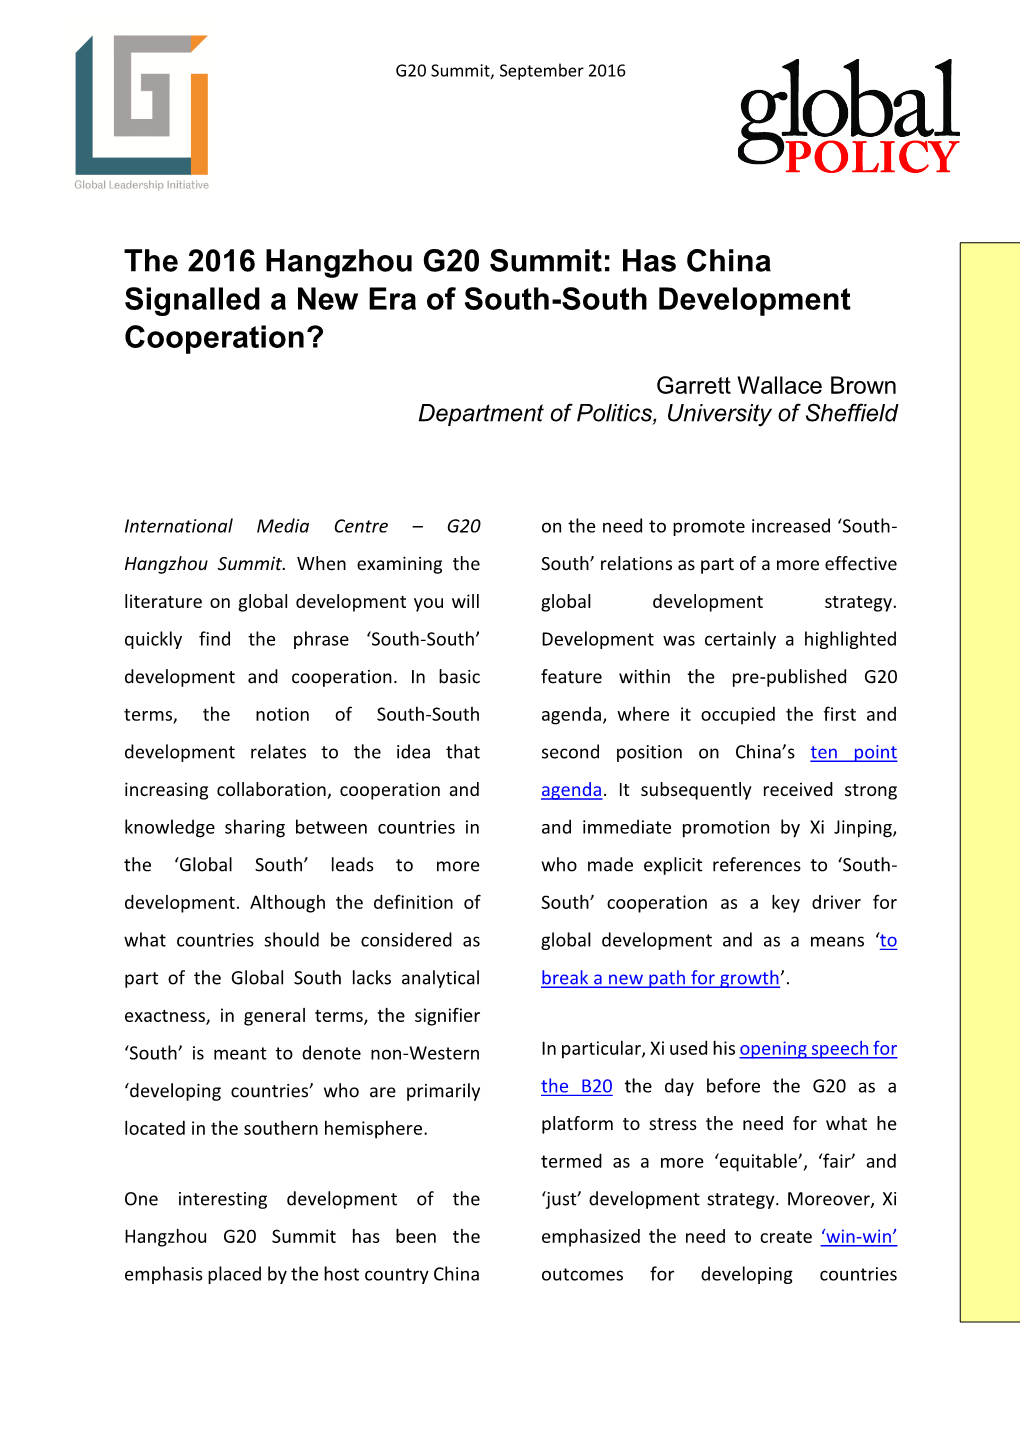 The 2016 Hangzhou G20 Summit